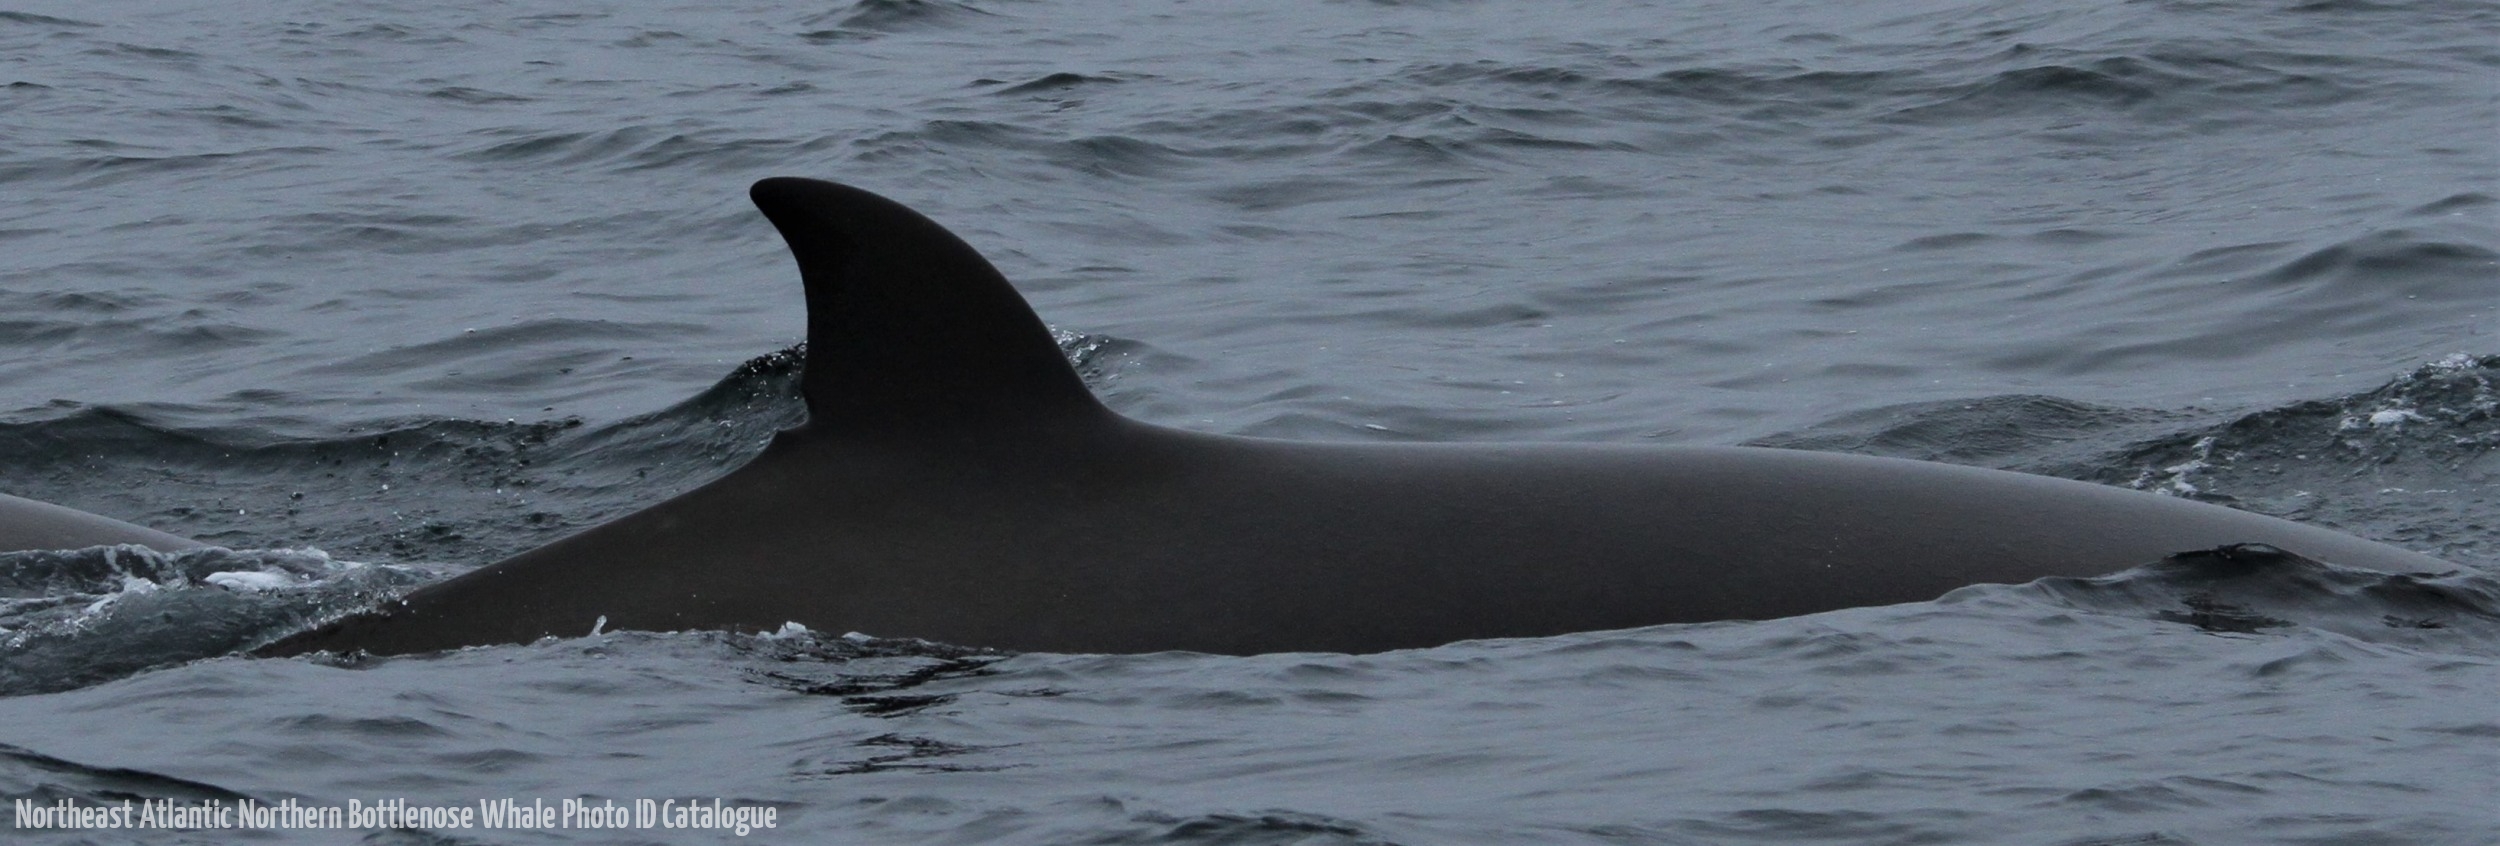 Whale ID: 0279,  Date taken: 08-07-2013,  Photographer: Paul H. Ensor